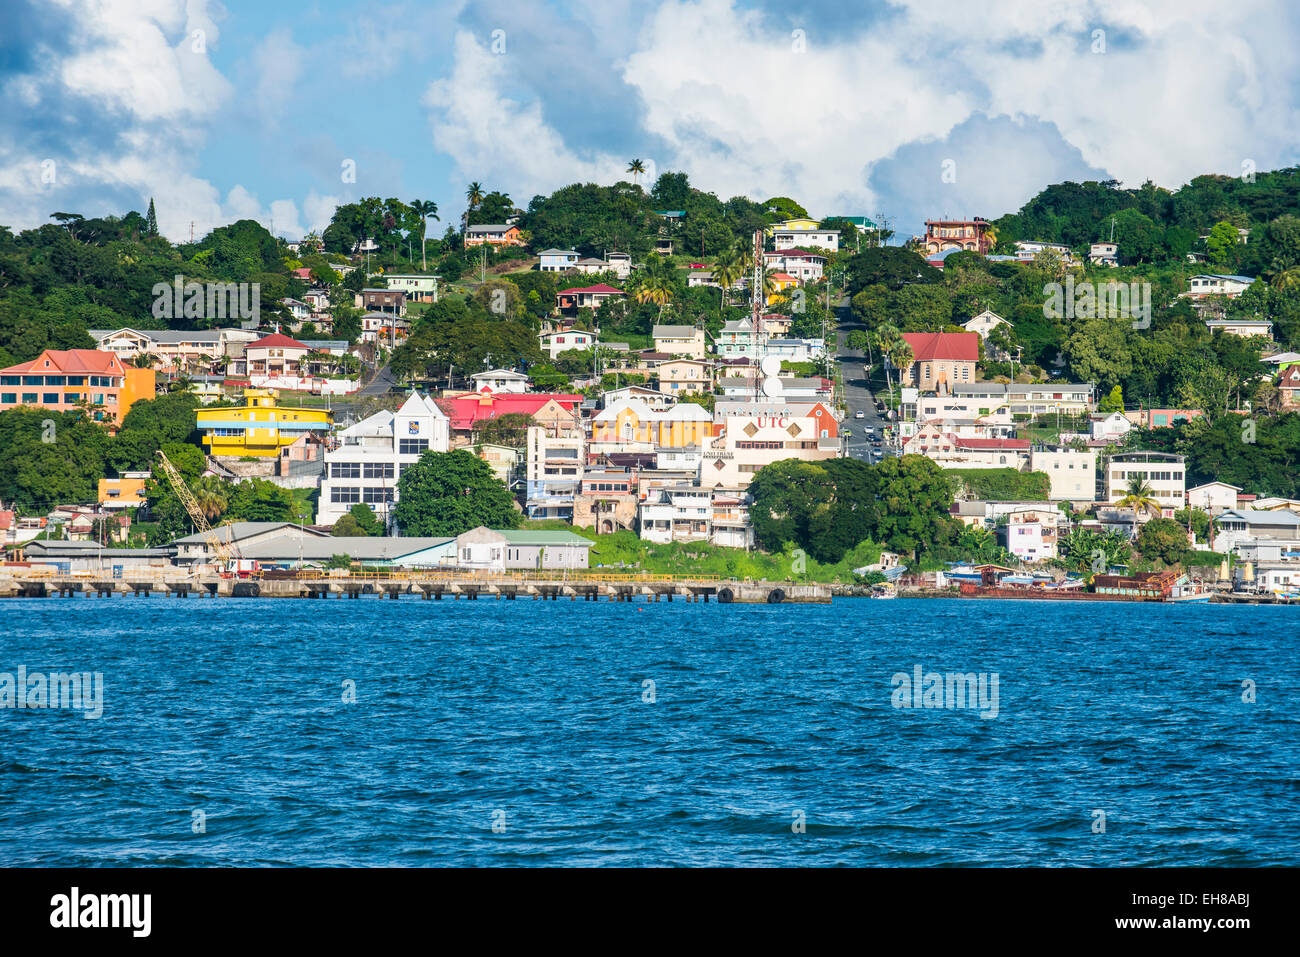 Die Stadt von Scarborough, Tobago, Trinidad und Tobago, Karibik, Karibik, Mittelamerika Stockfoto